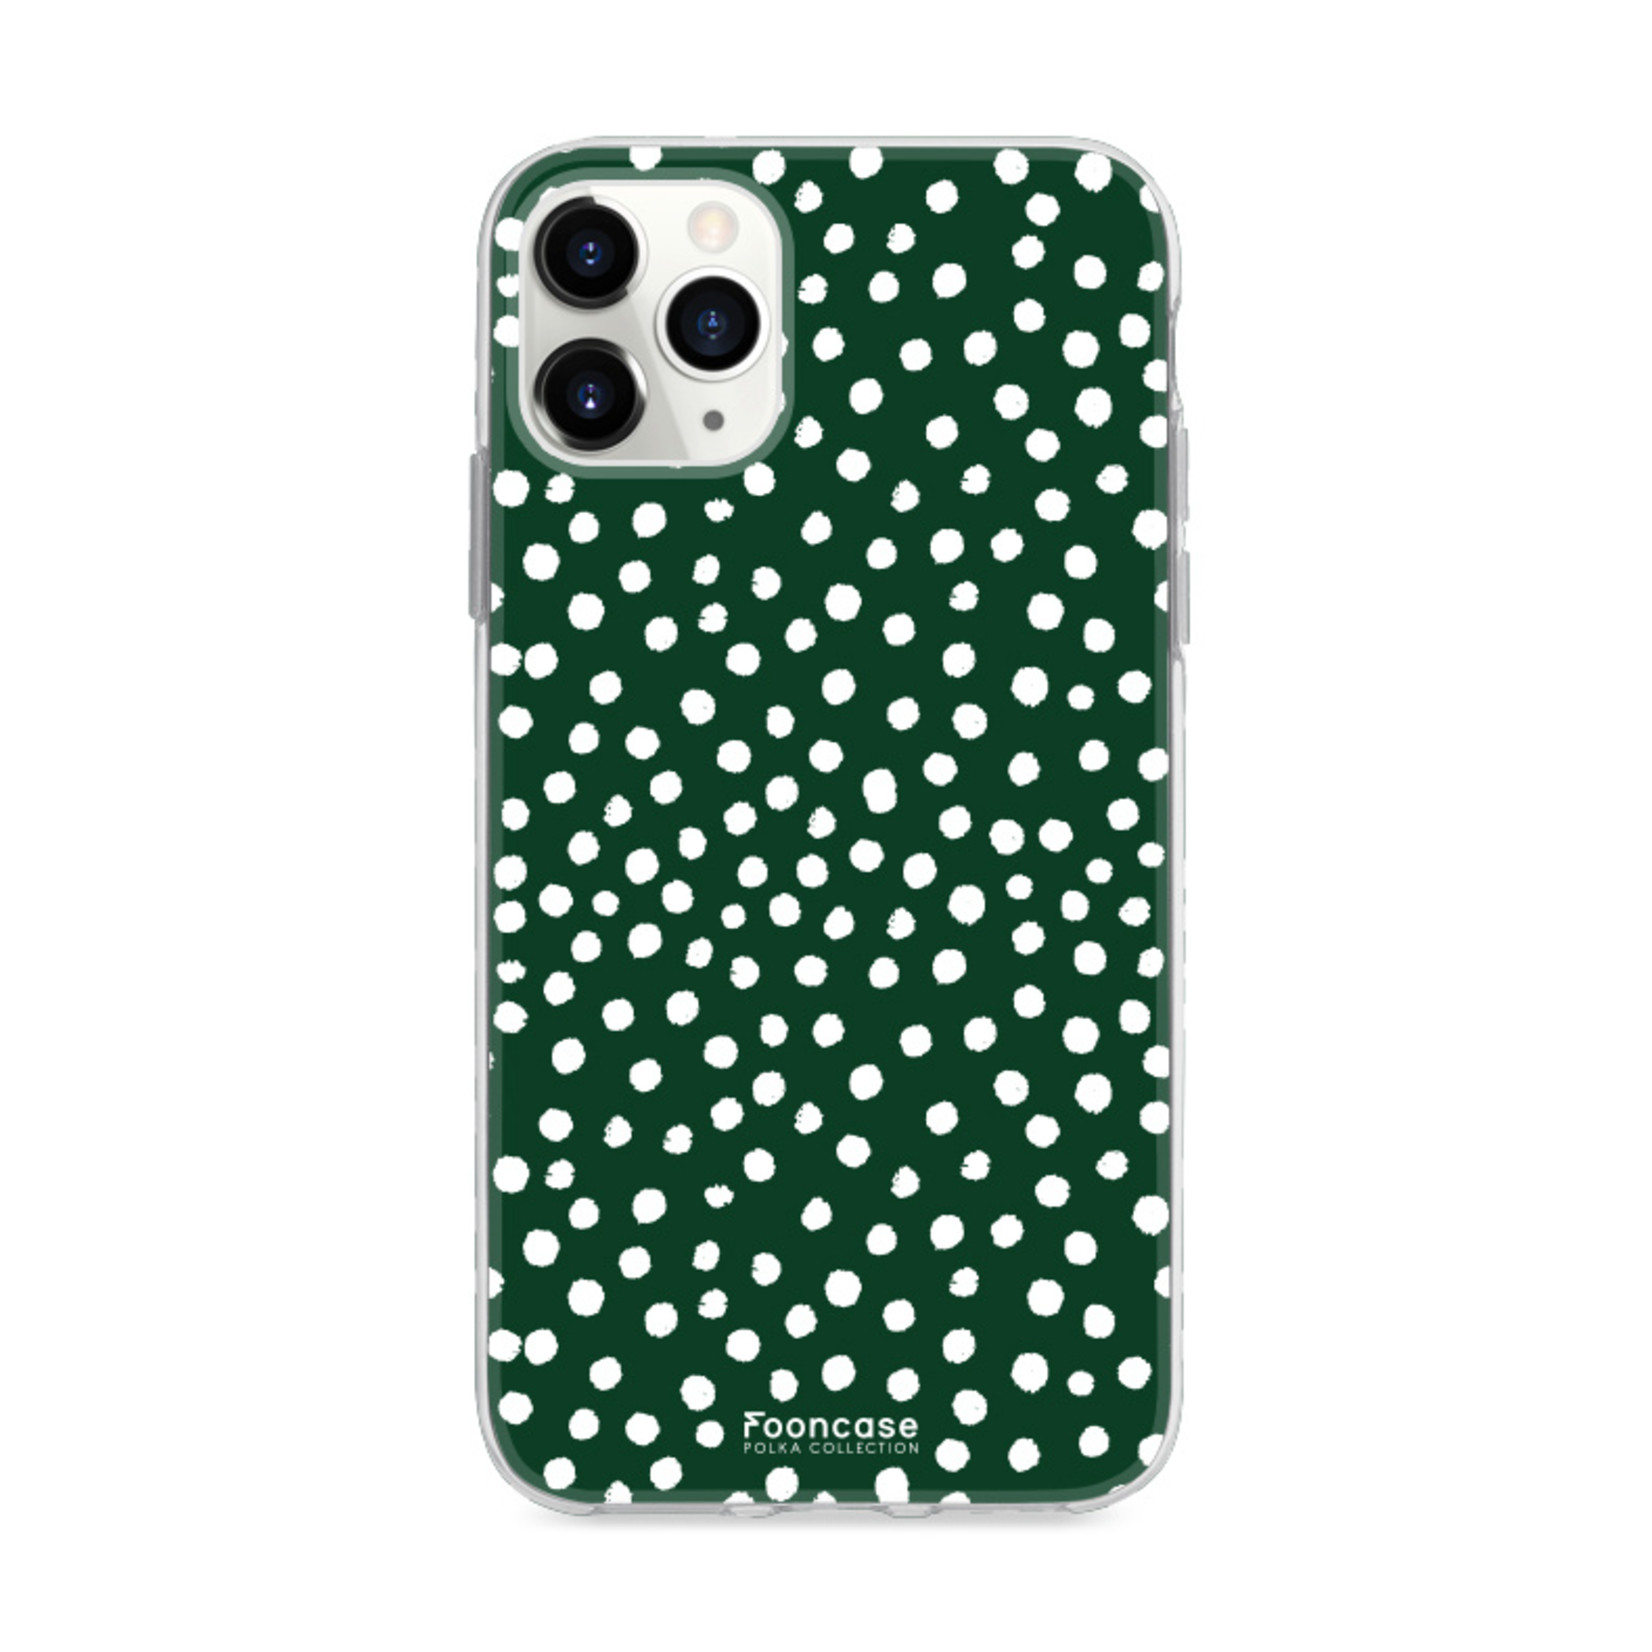 FOONCASE IPhone 12 Pro - POLKA COLLECTION / Dark green